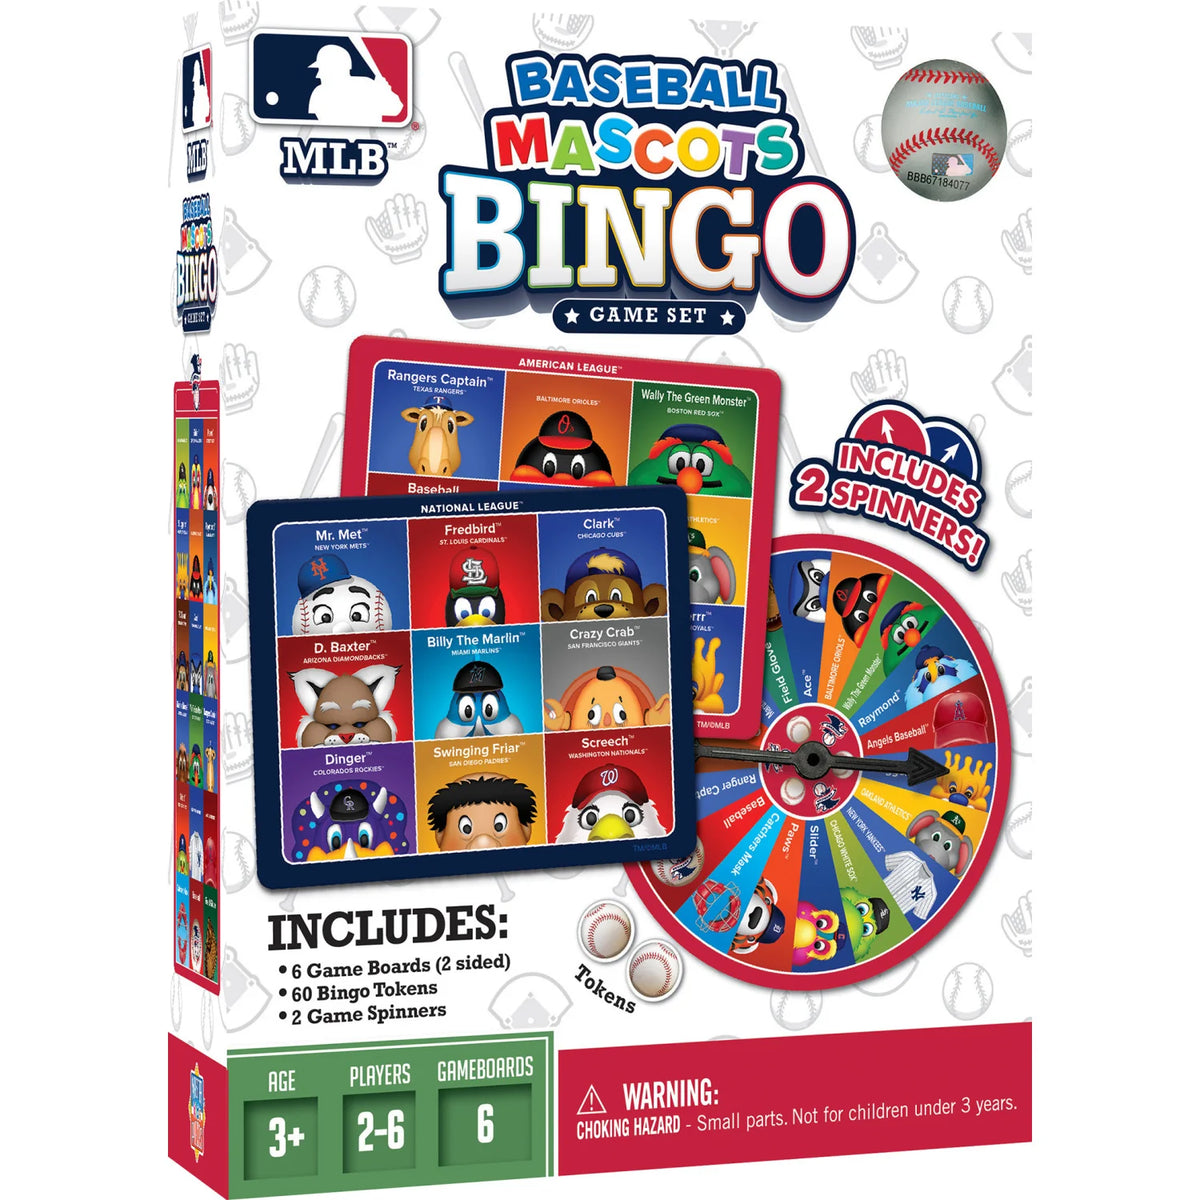 MLB Mascots Bingo Cover